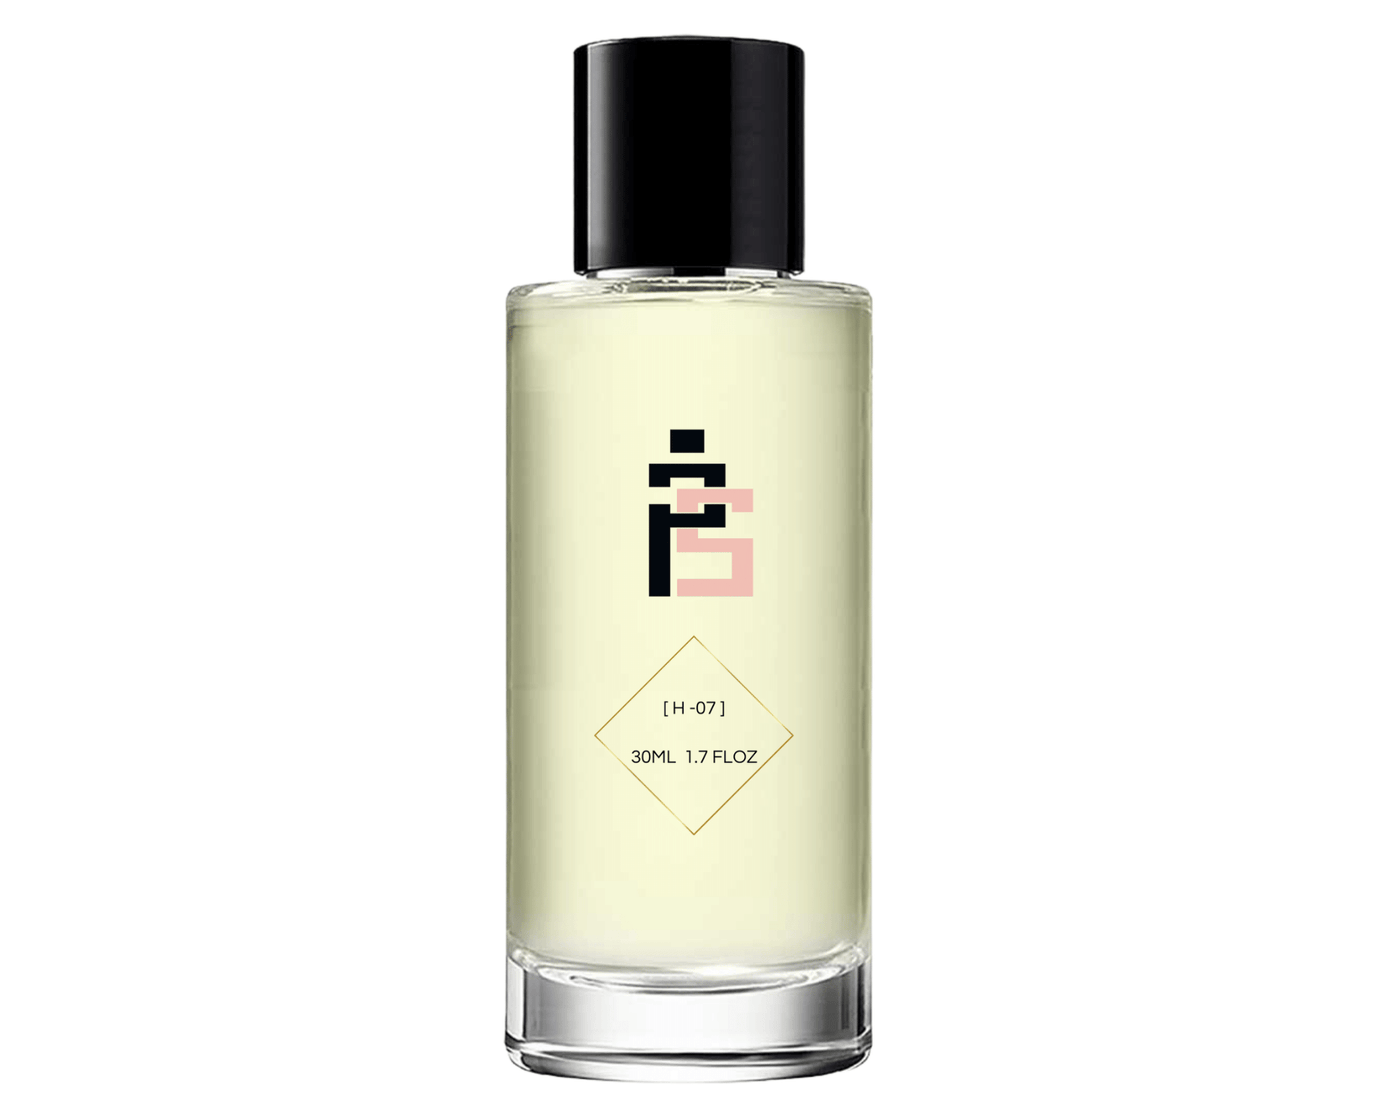 Parfum - H07 | similaire à Aventus